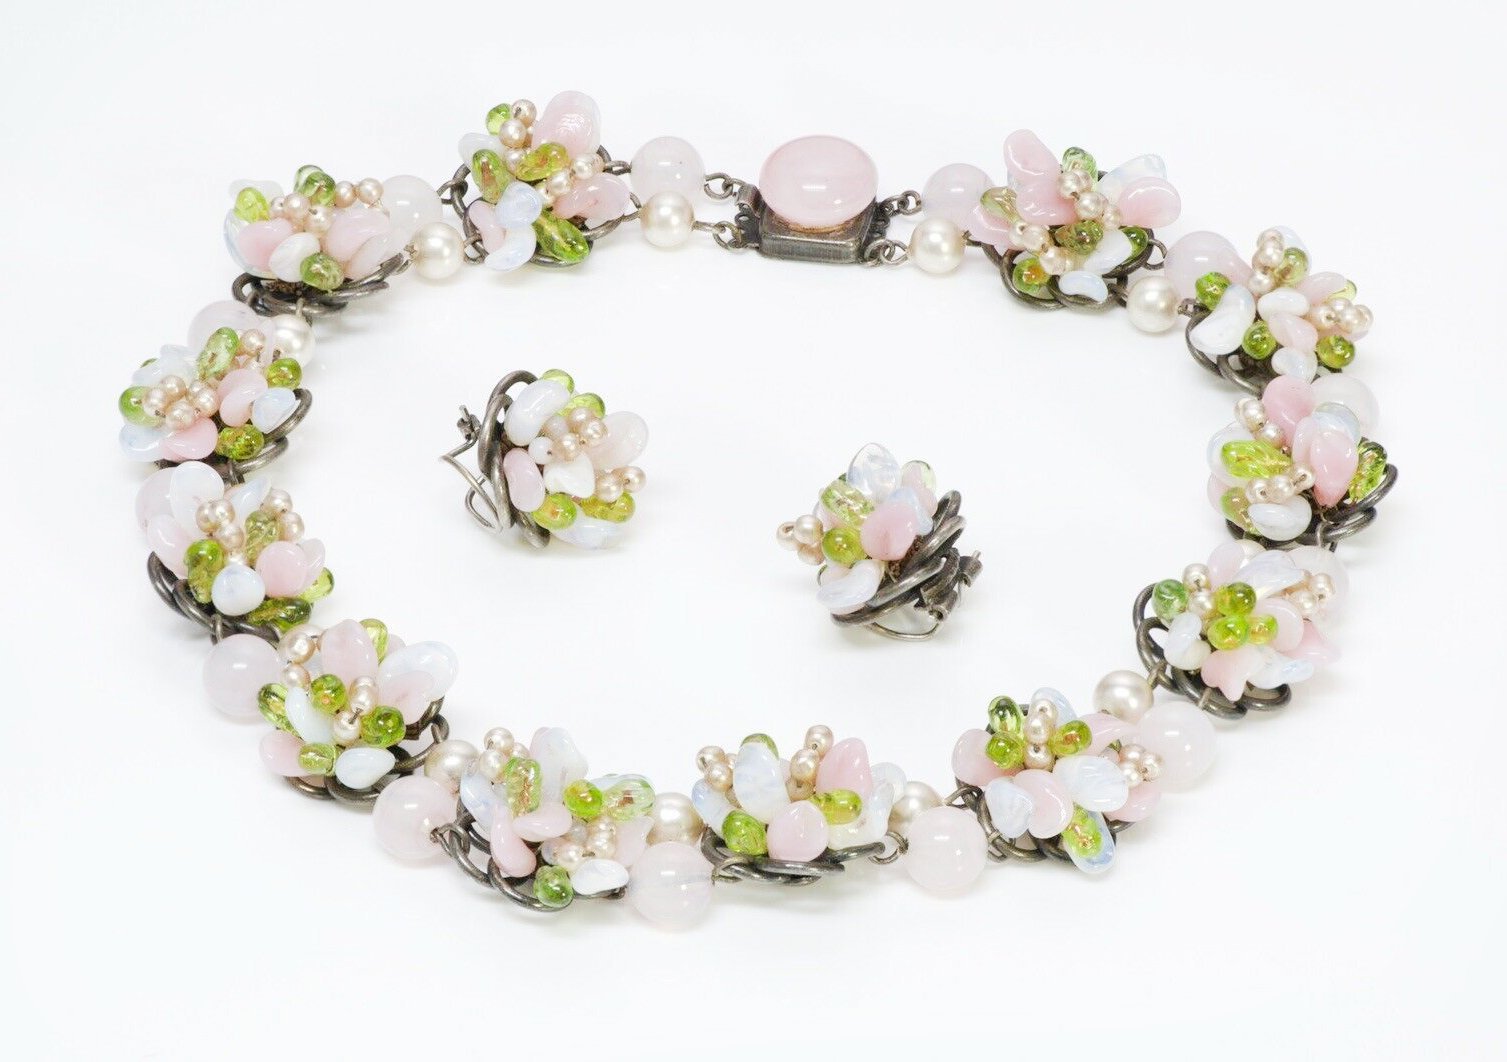 Louis Rousselet 1950’s Flower Glass Beads Necklace Earrings Set